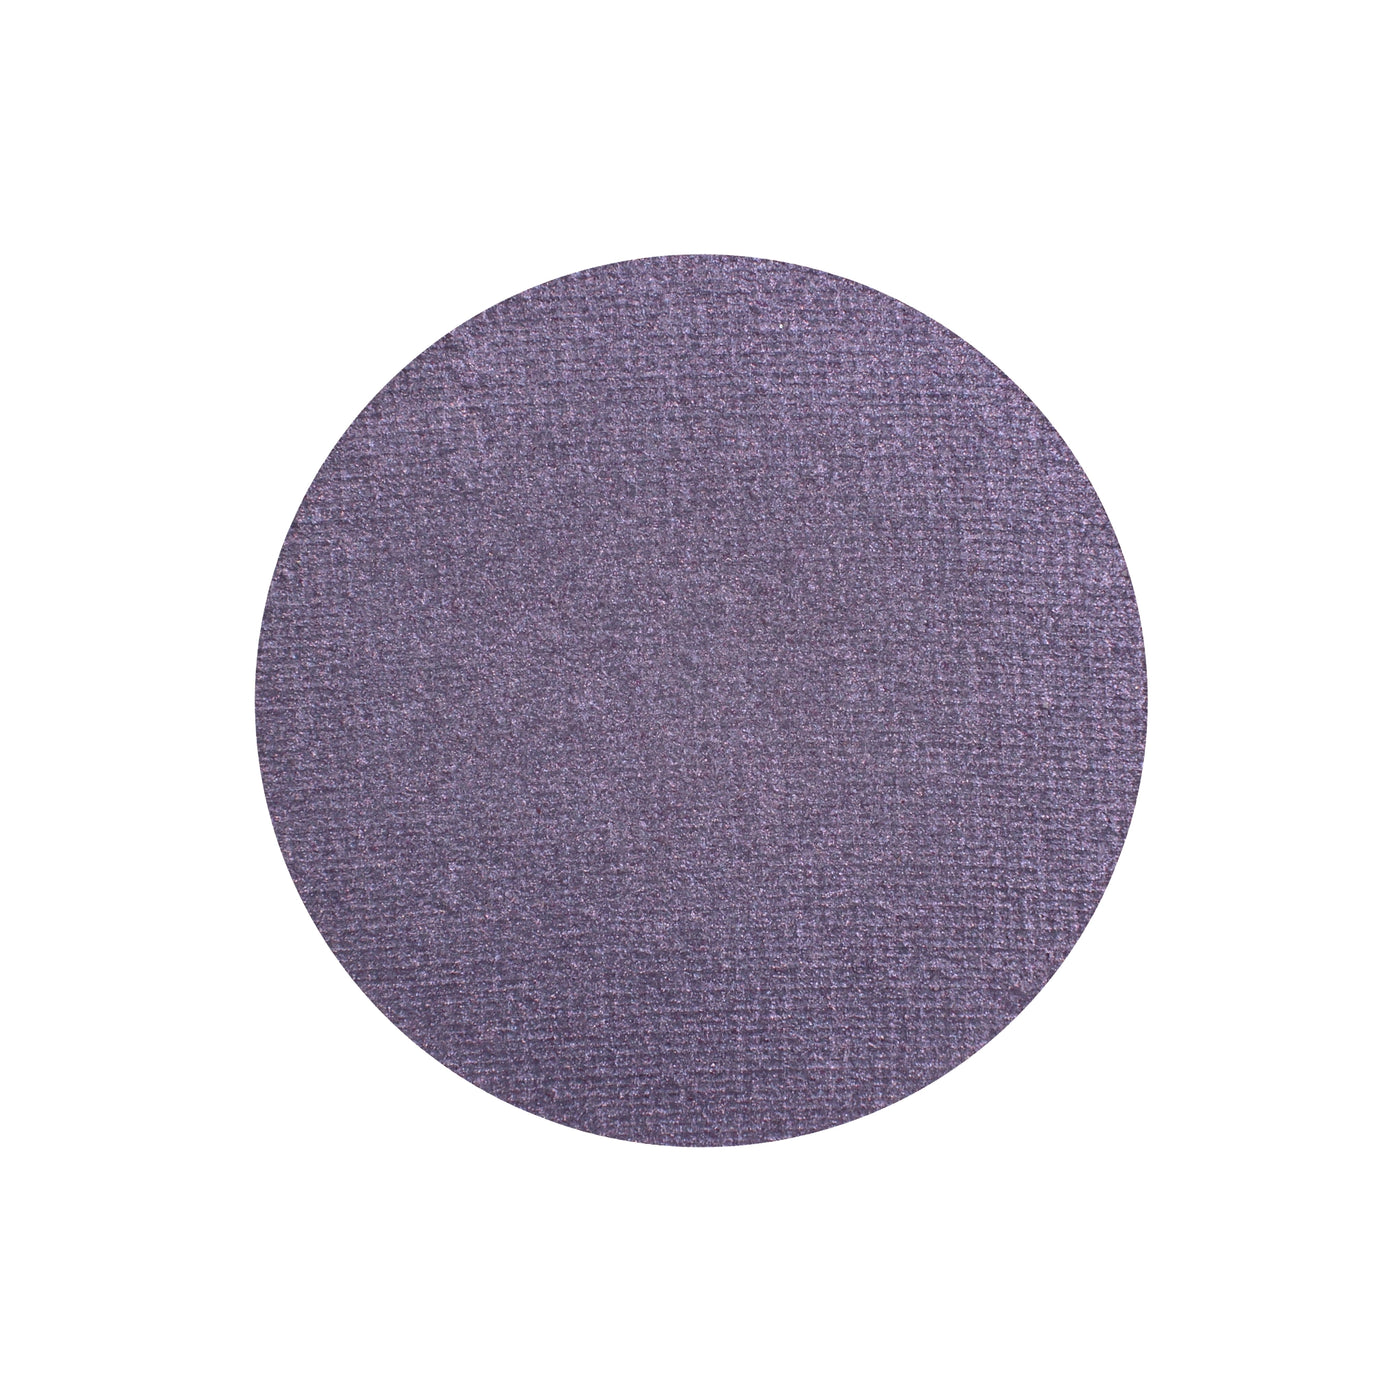 Pure Purple - Eyeshadow Pan